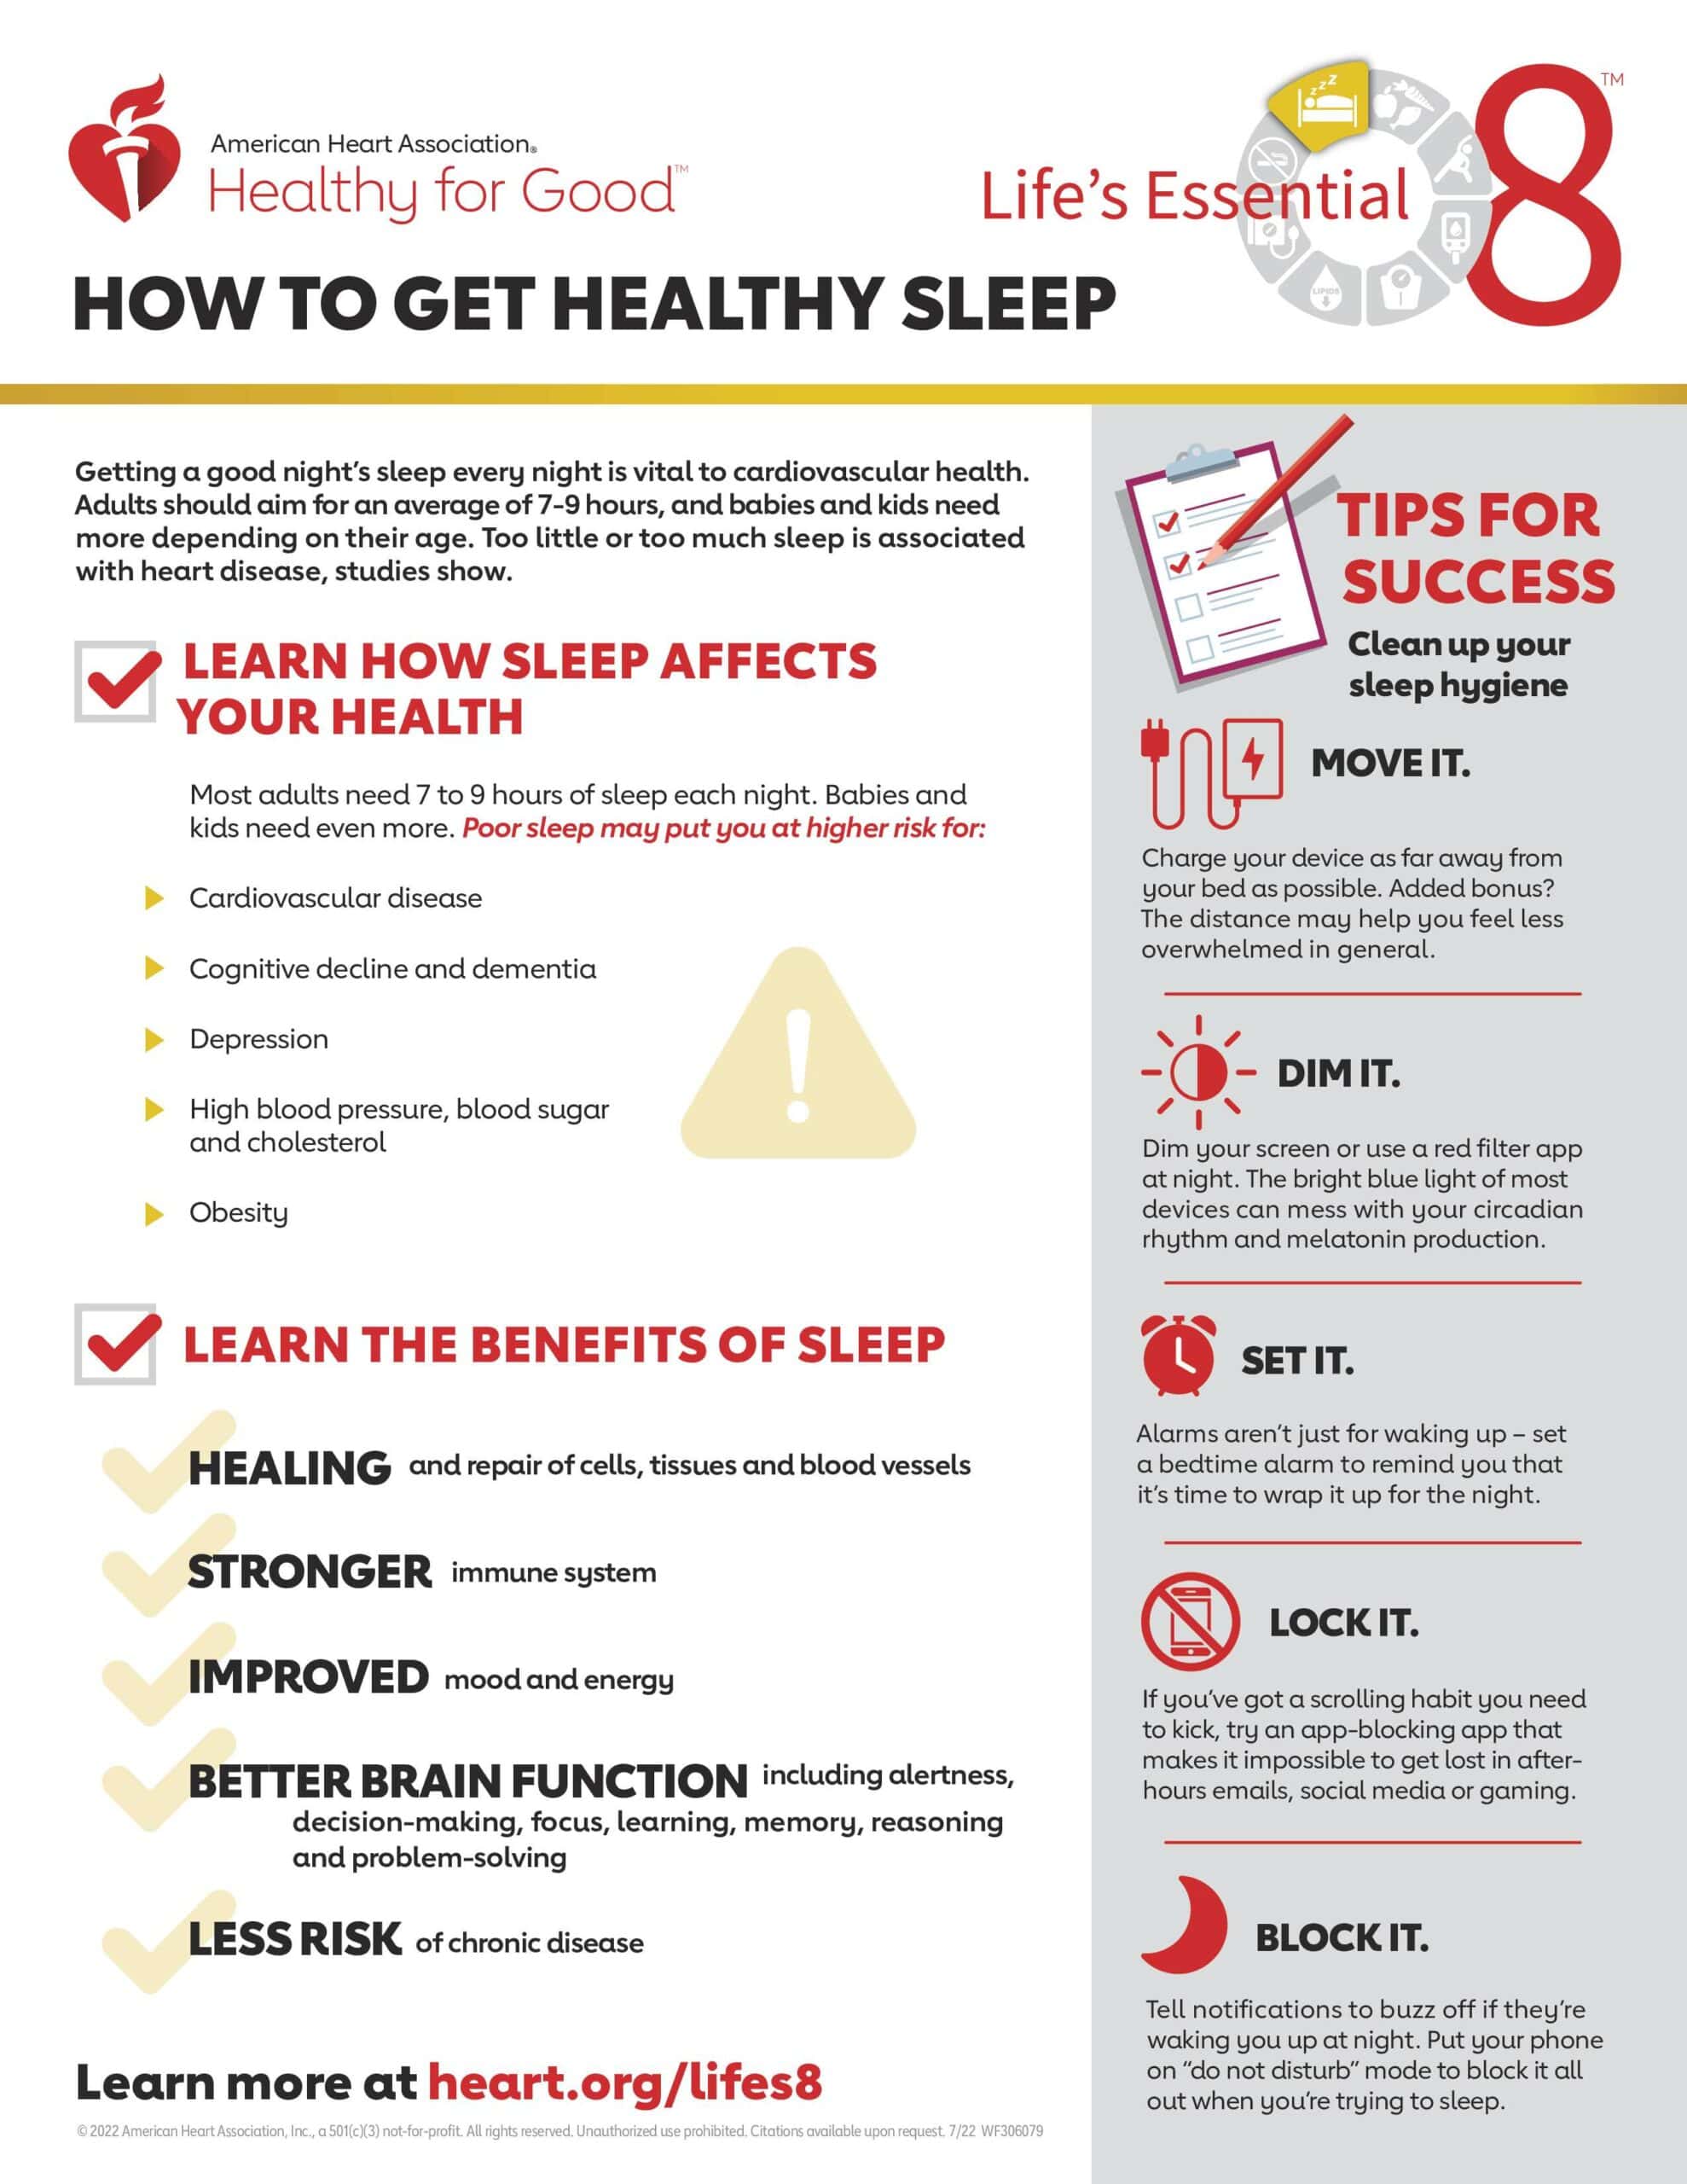 Get healthy sleep - Dr. Axe